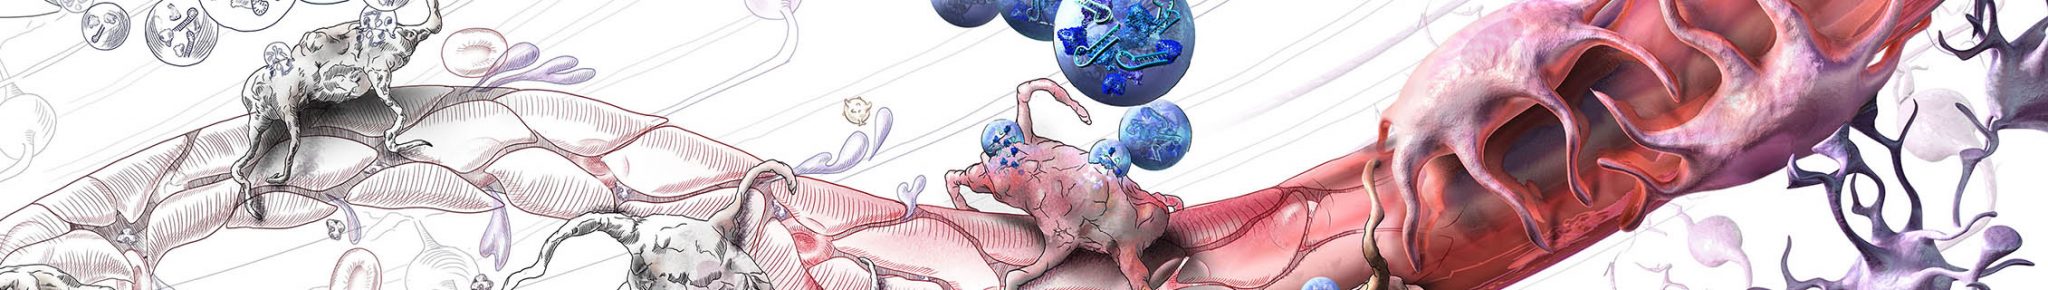 biotech illustration sketch to 3d art